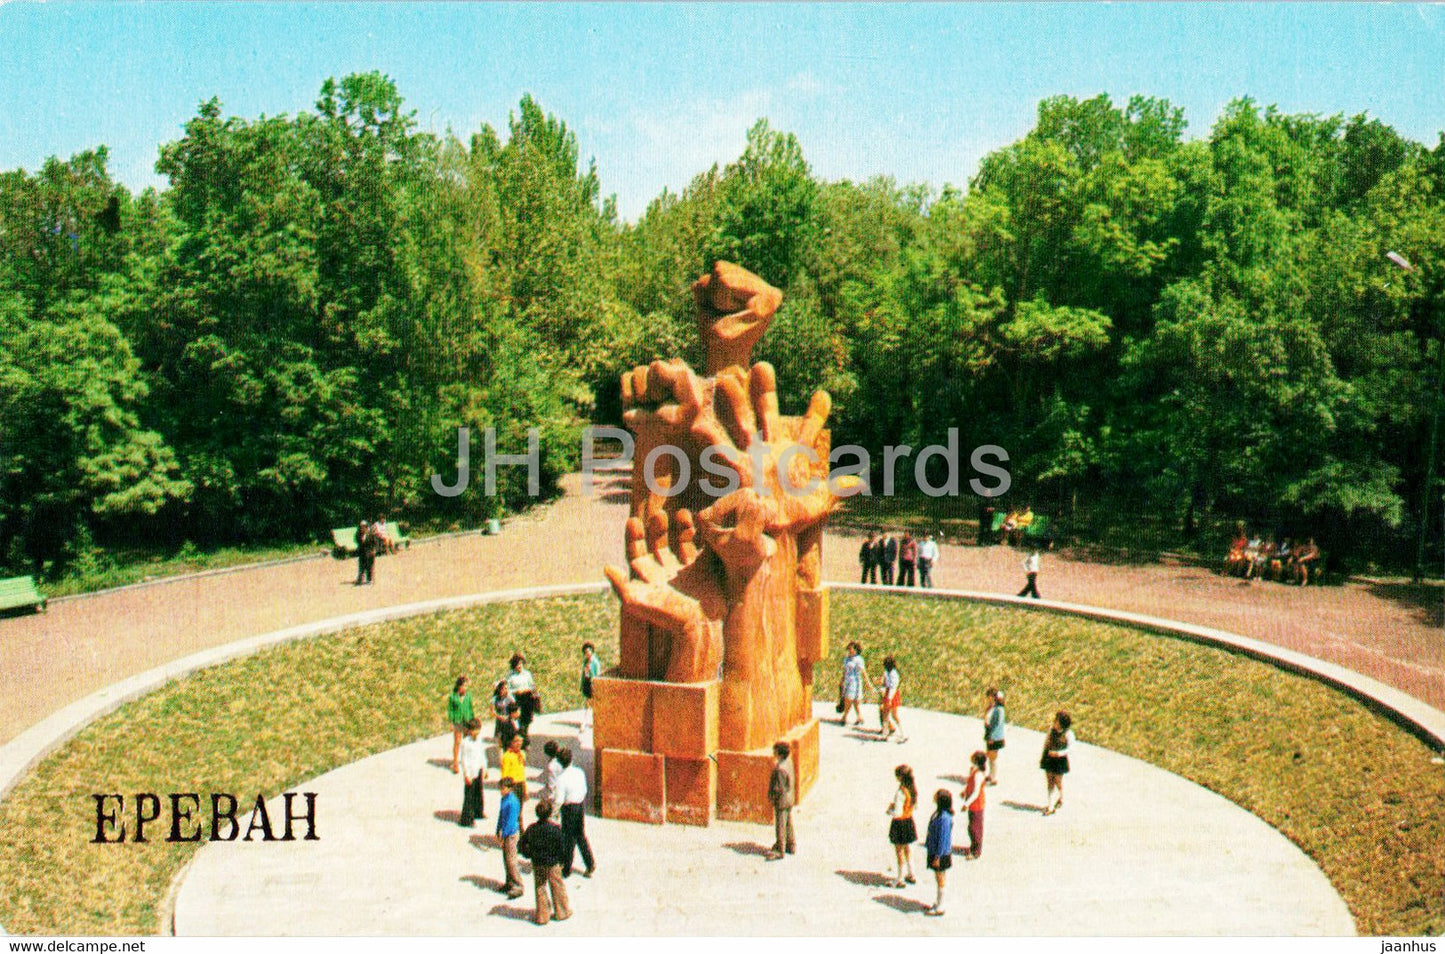 Yerevan - No To War monument - 1981 - Armenia USSR - unused - JH Postcards